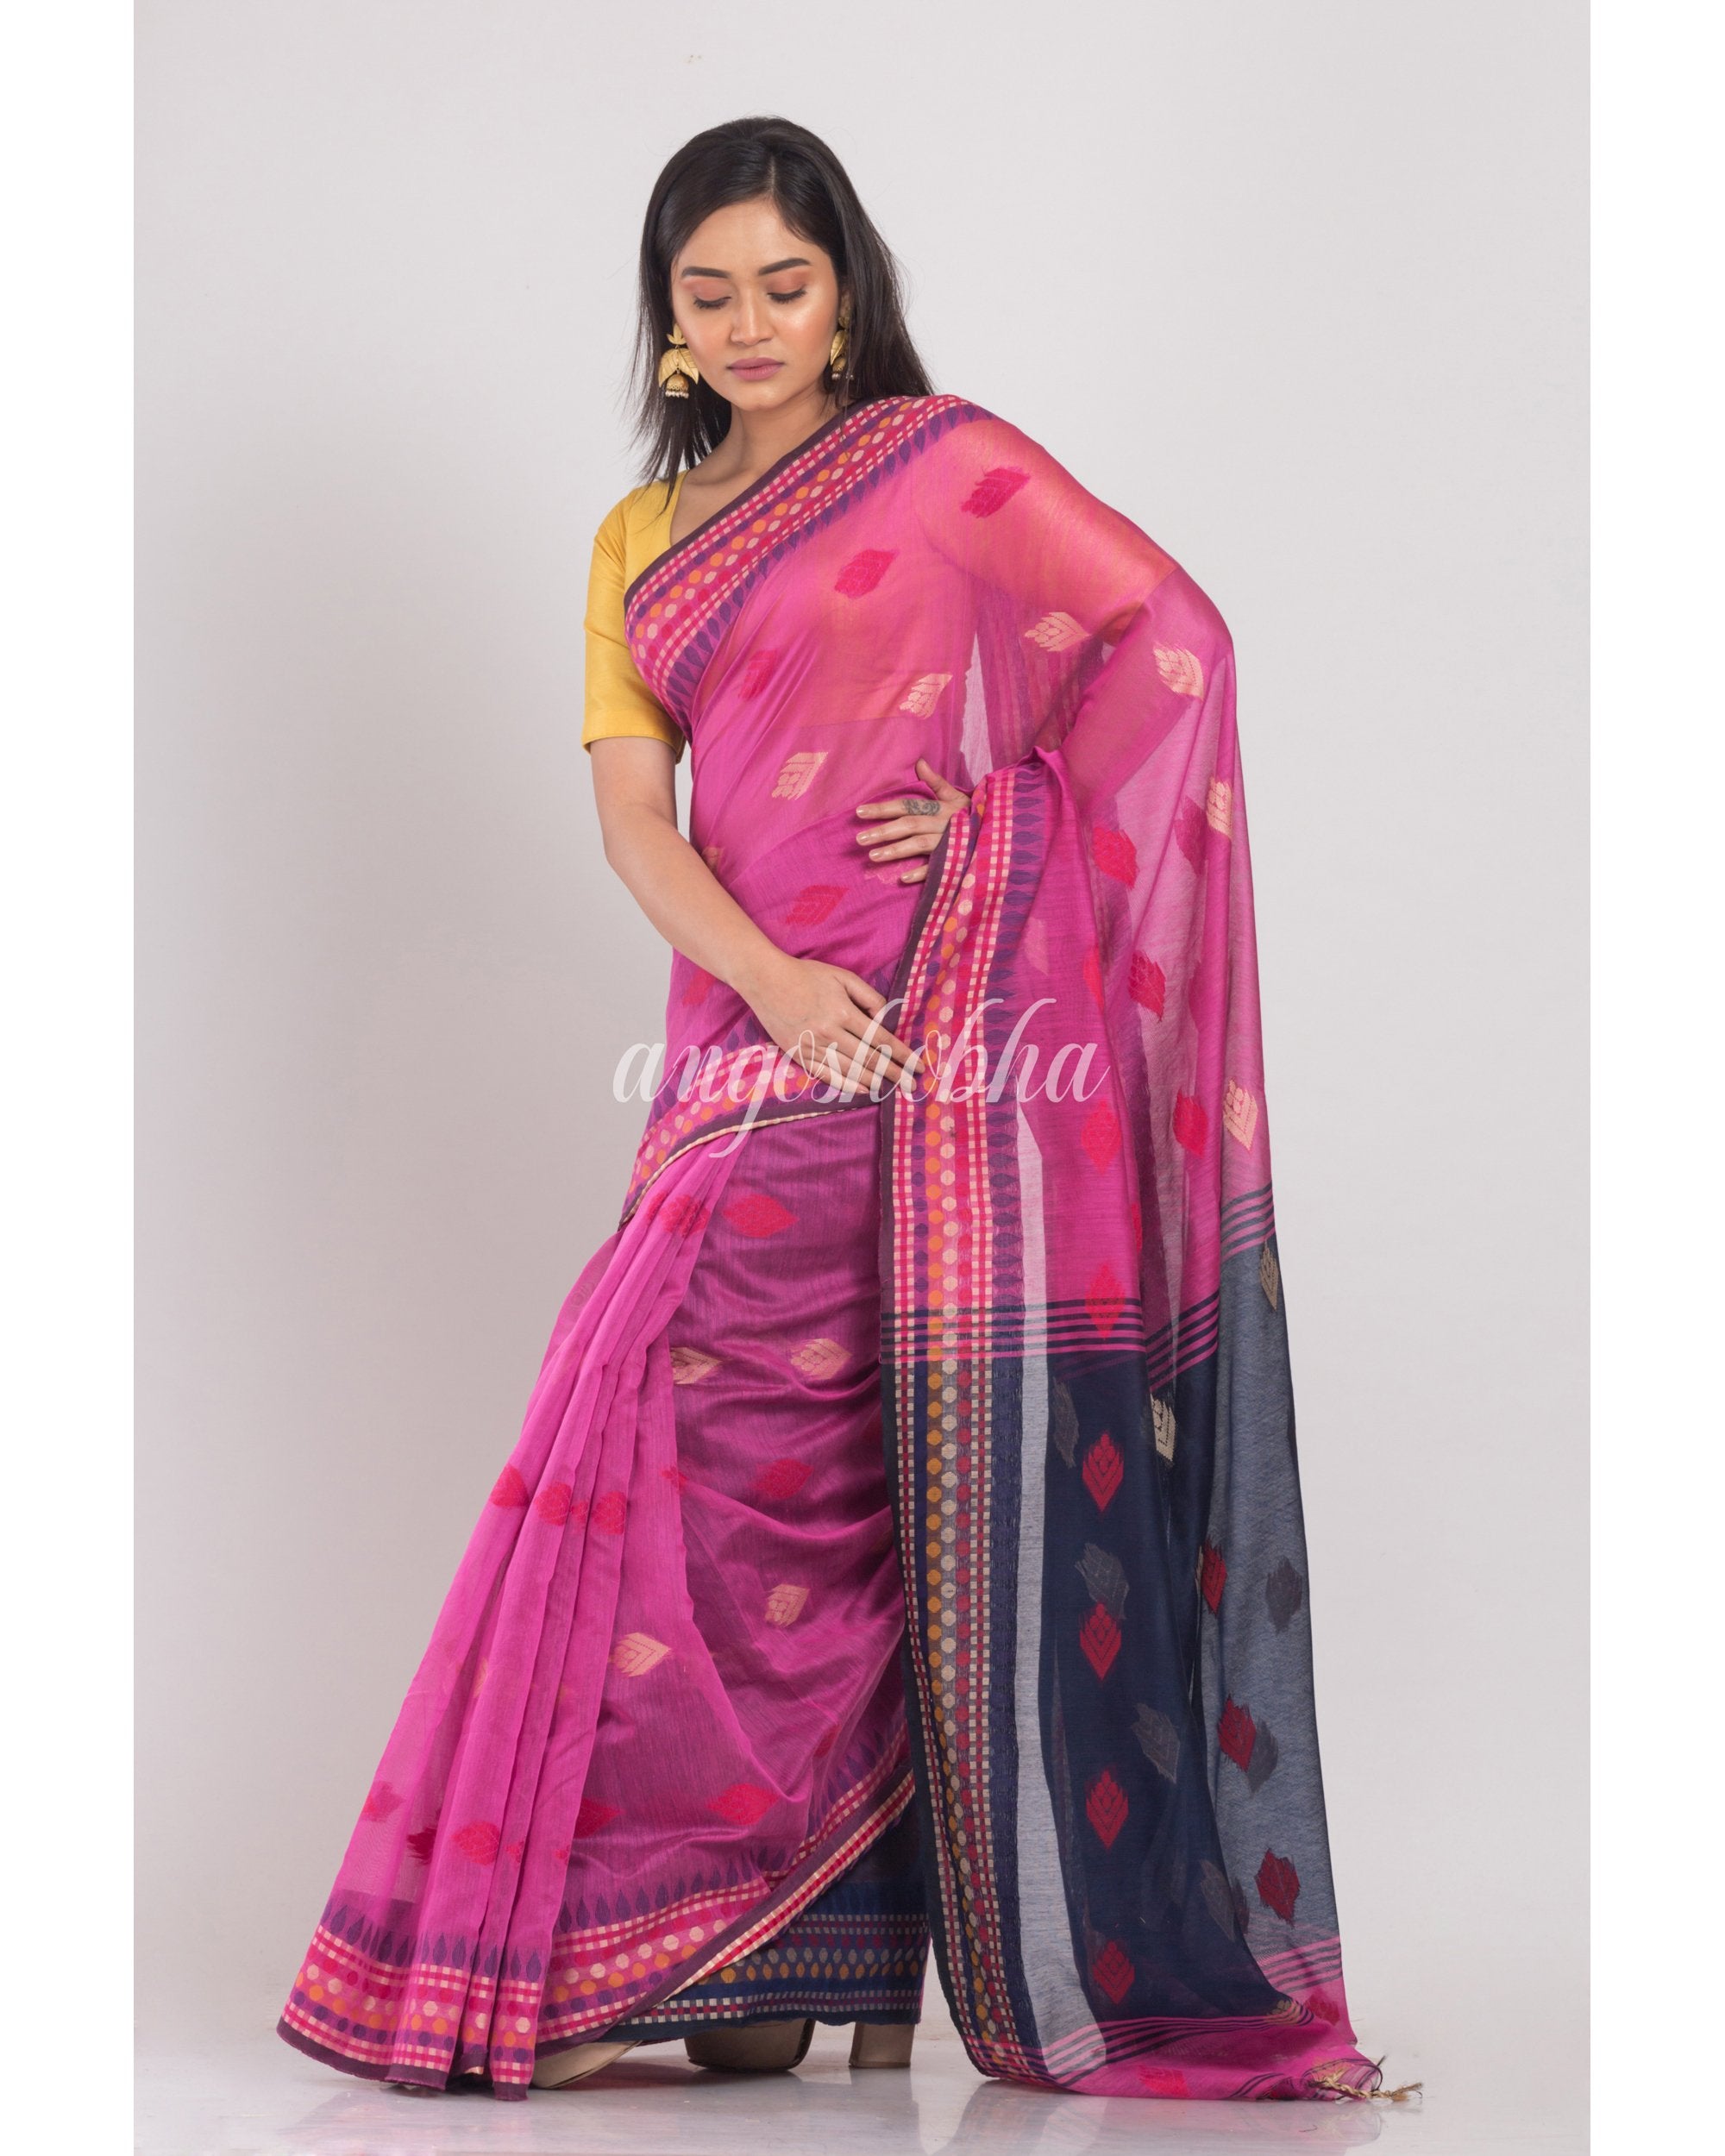 Women's Pink Handloom Blended Cotton Saree - Angoshobha